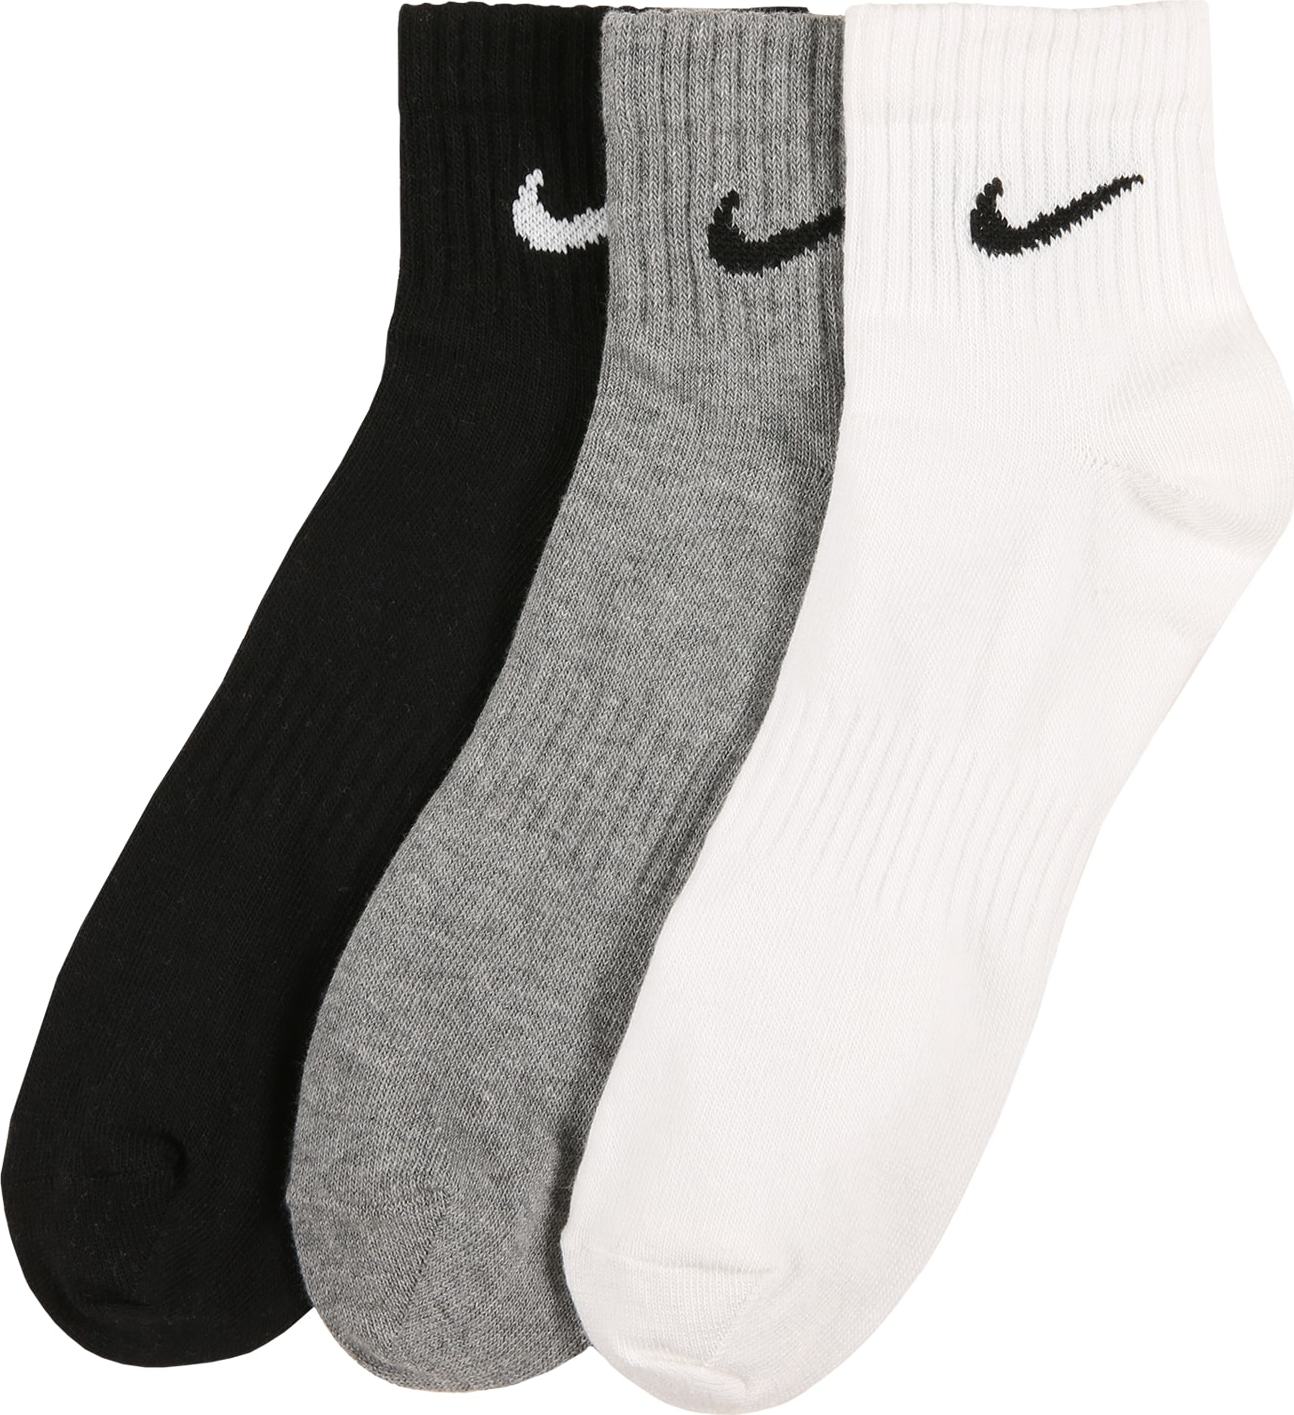 NIKE Sportovní ponožky šedý melír / černá / bílá